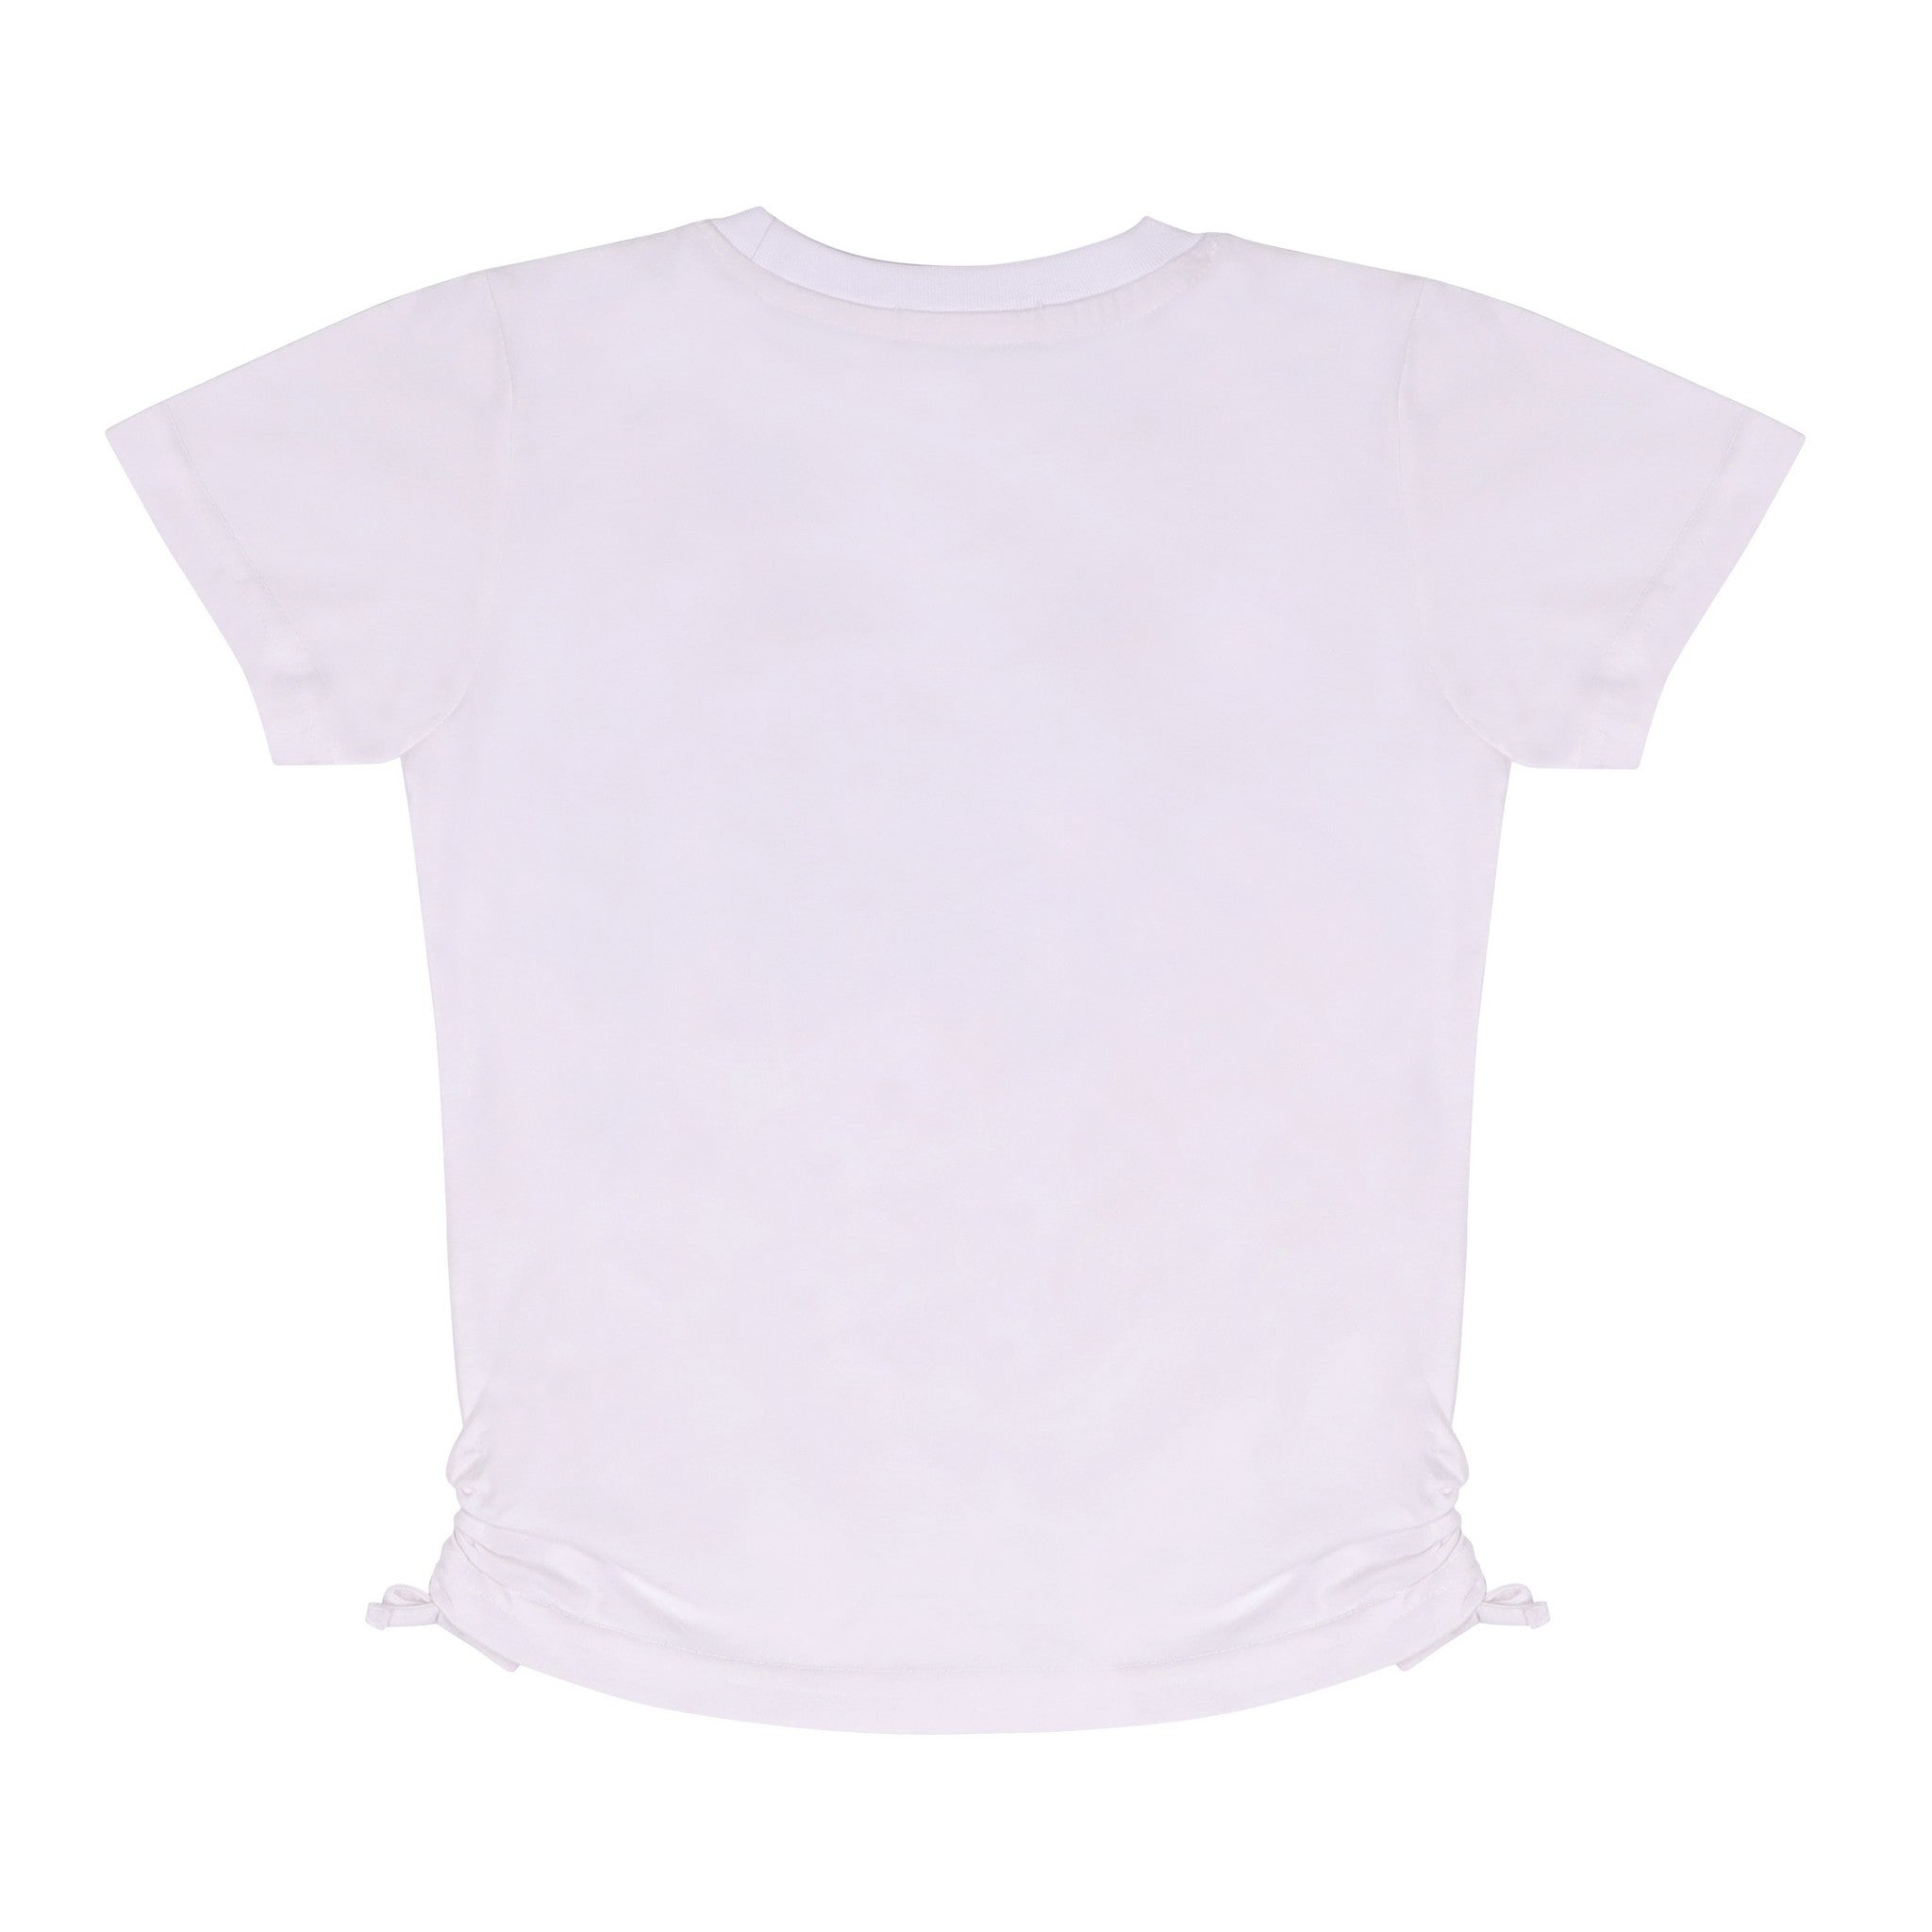 Skate Print White T-Shirt